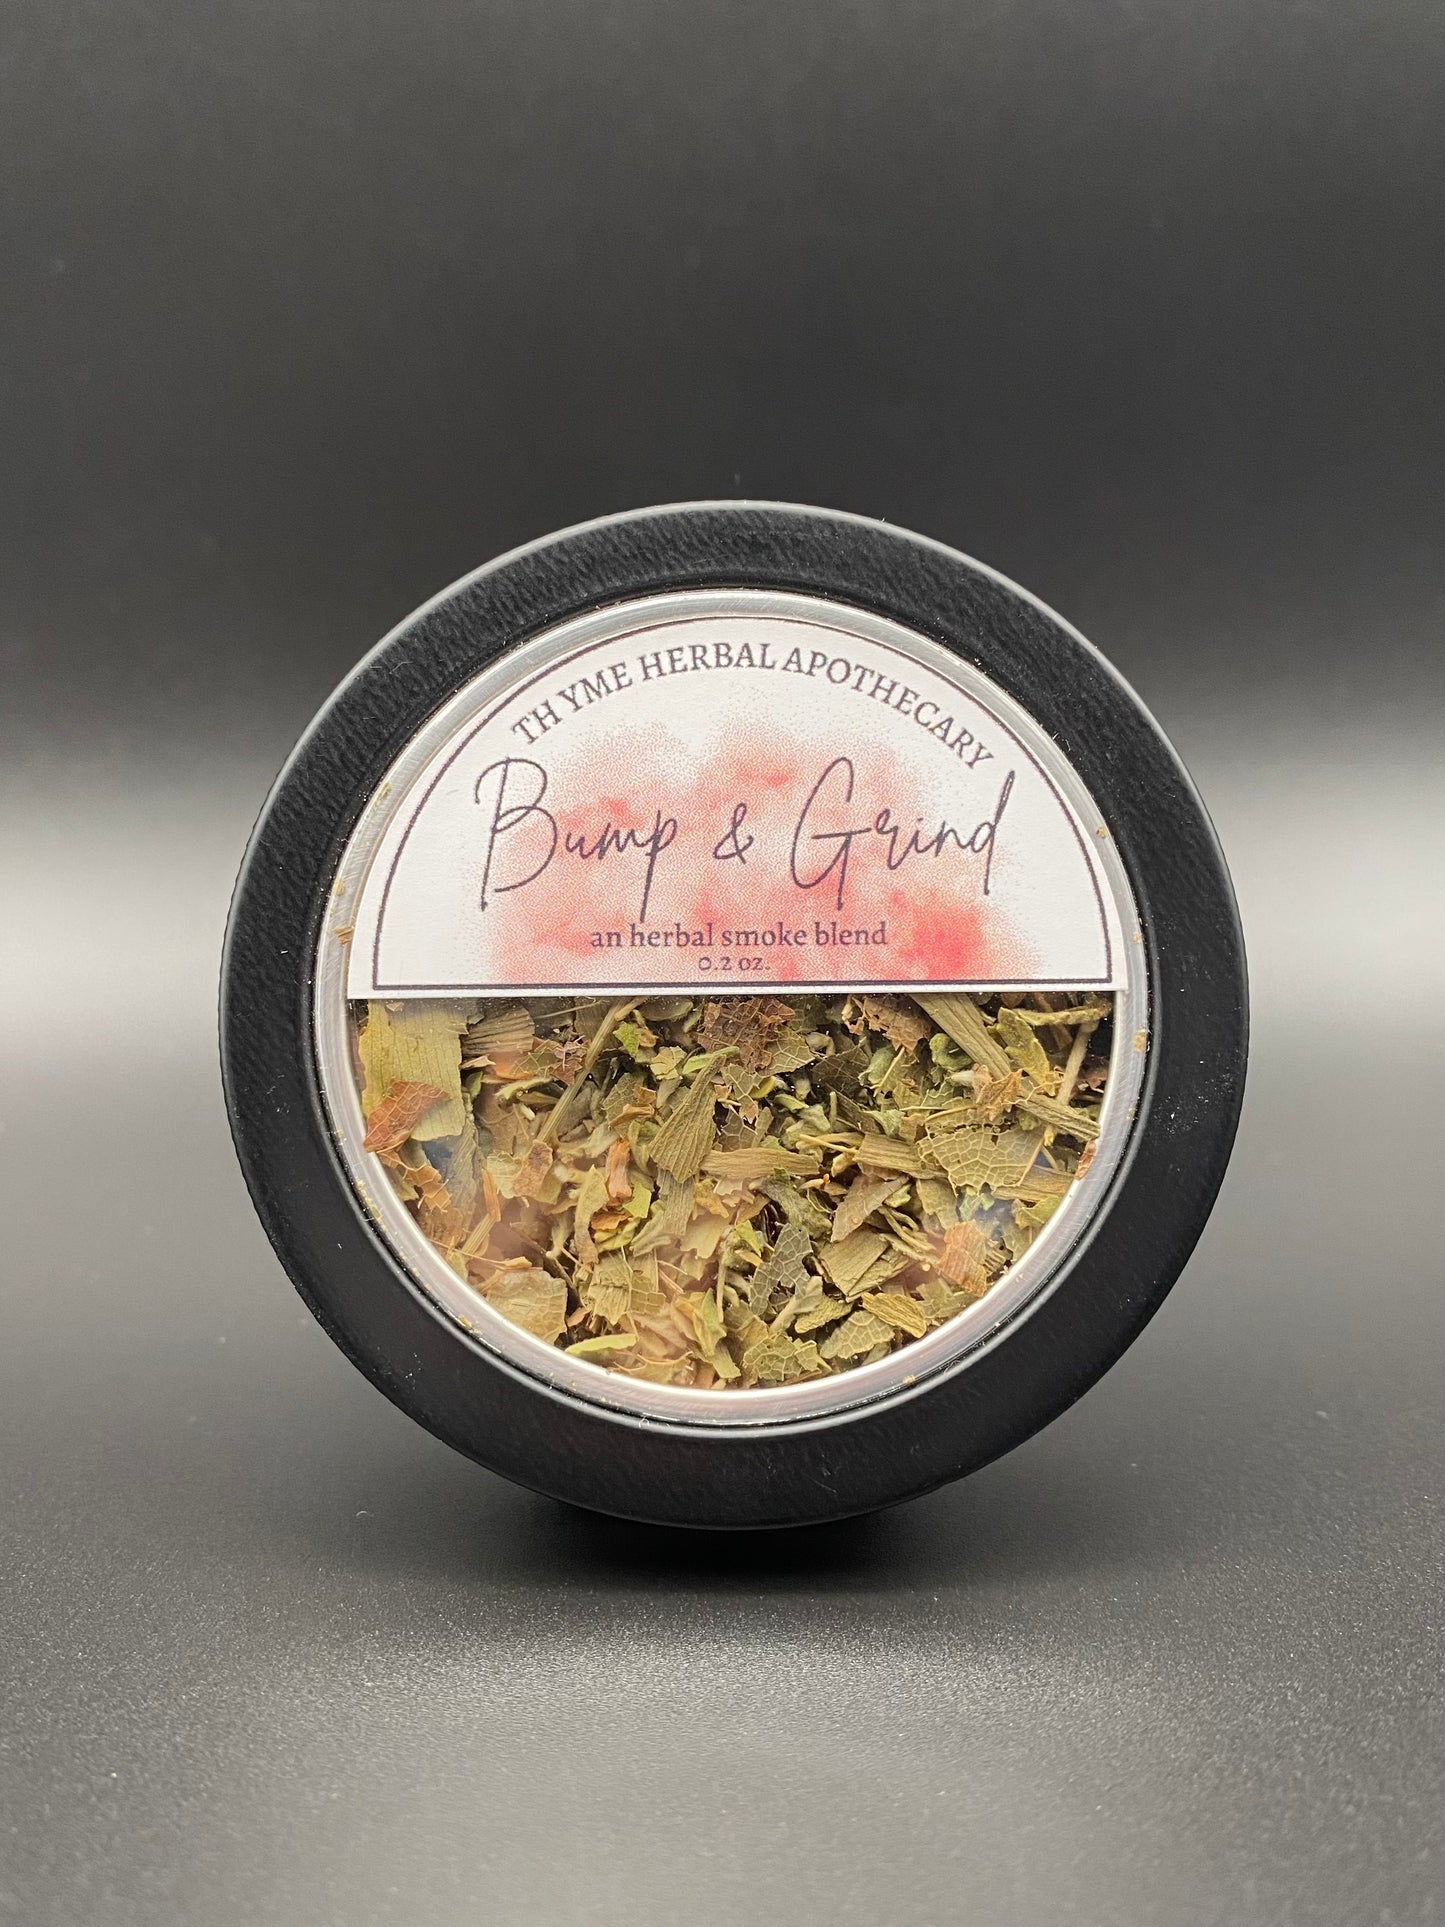 Bump & Grind: Herbal Smoke Blend